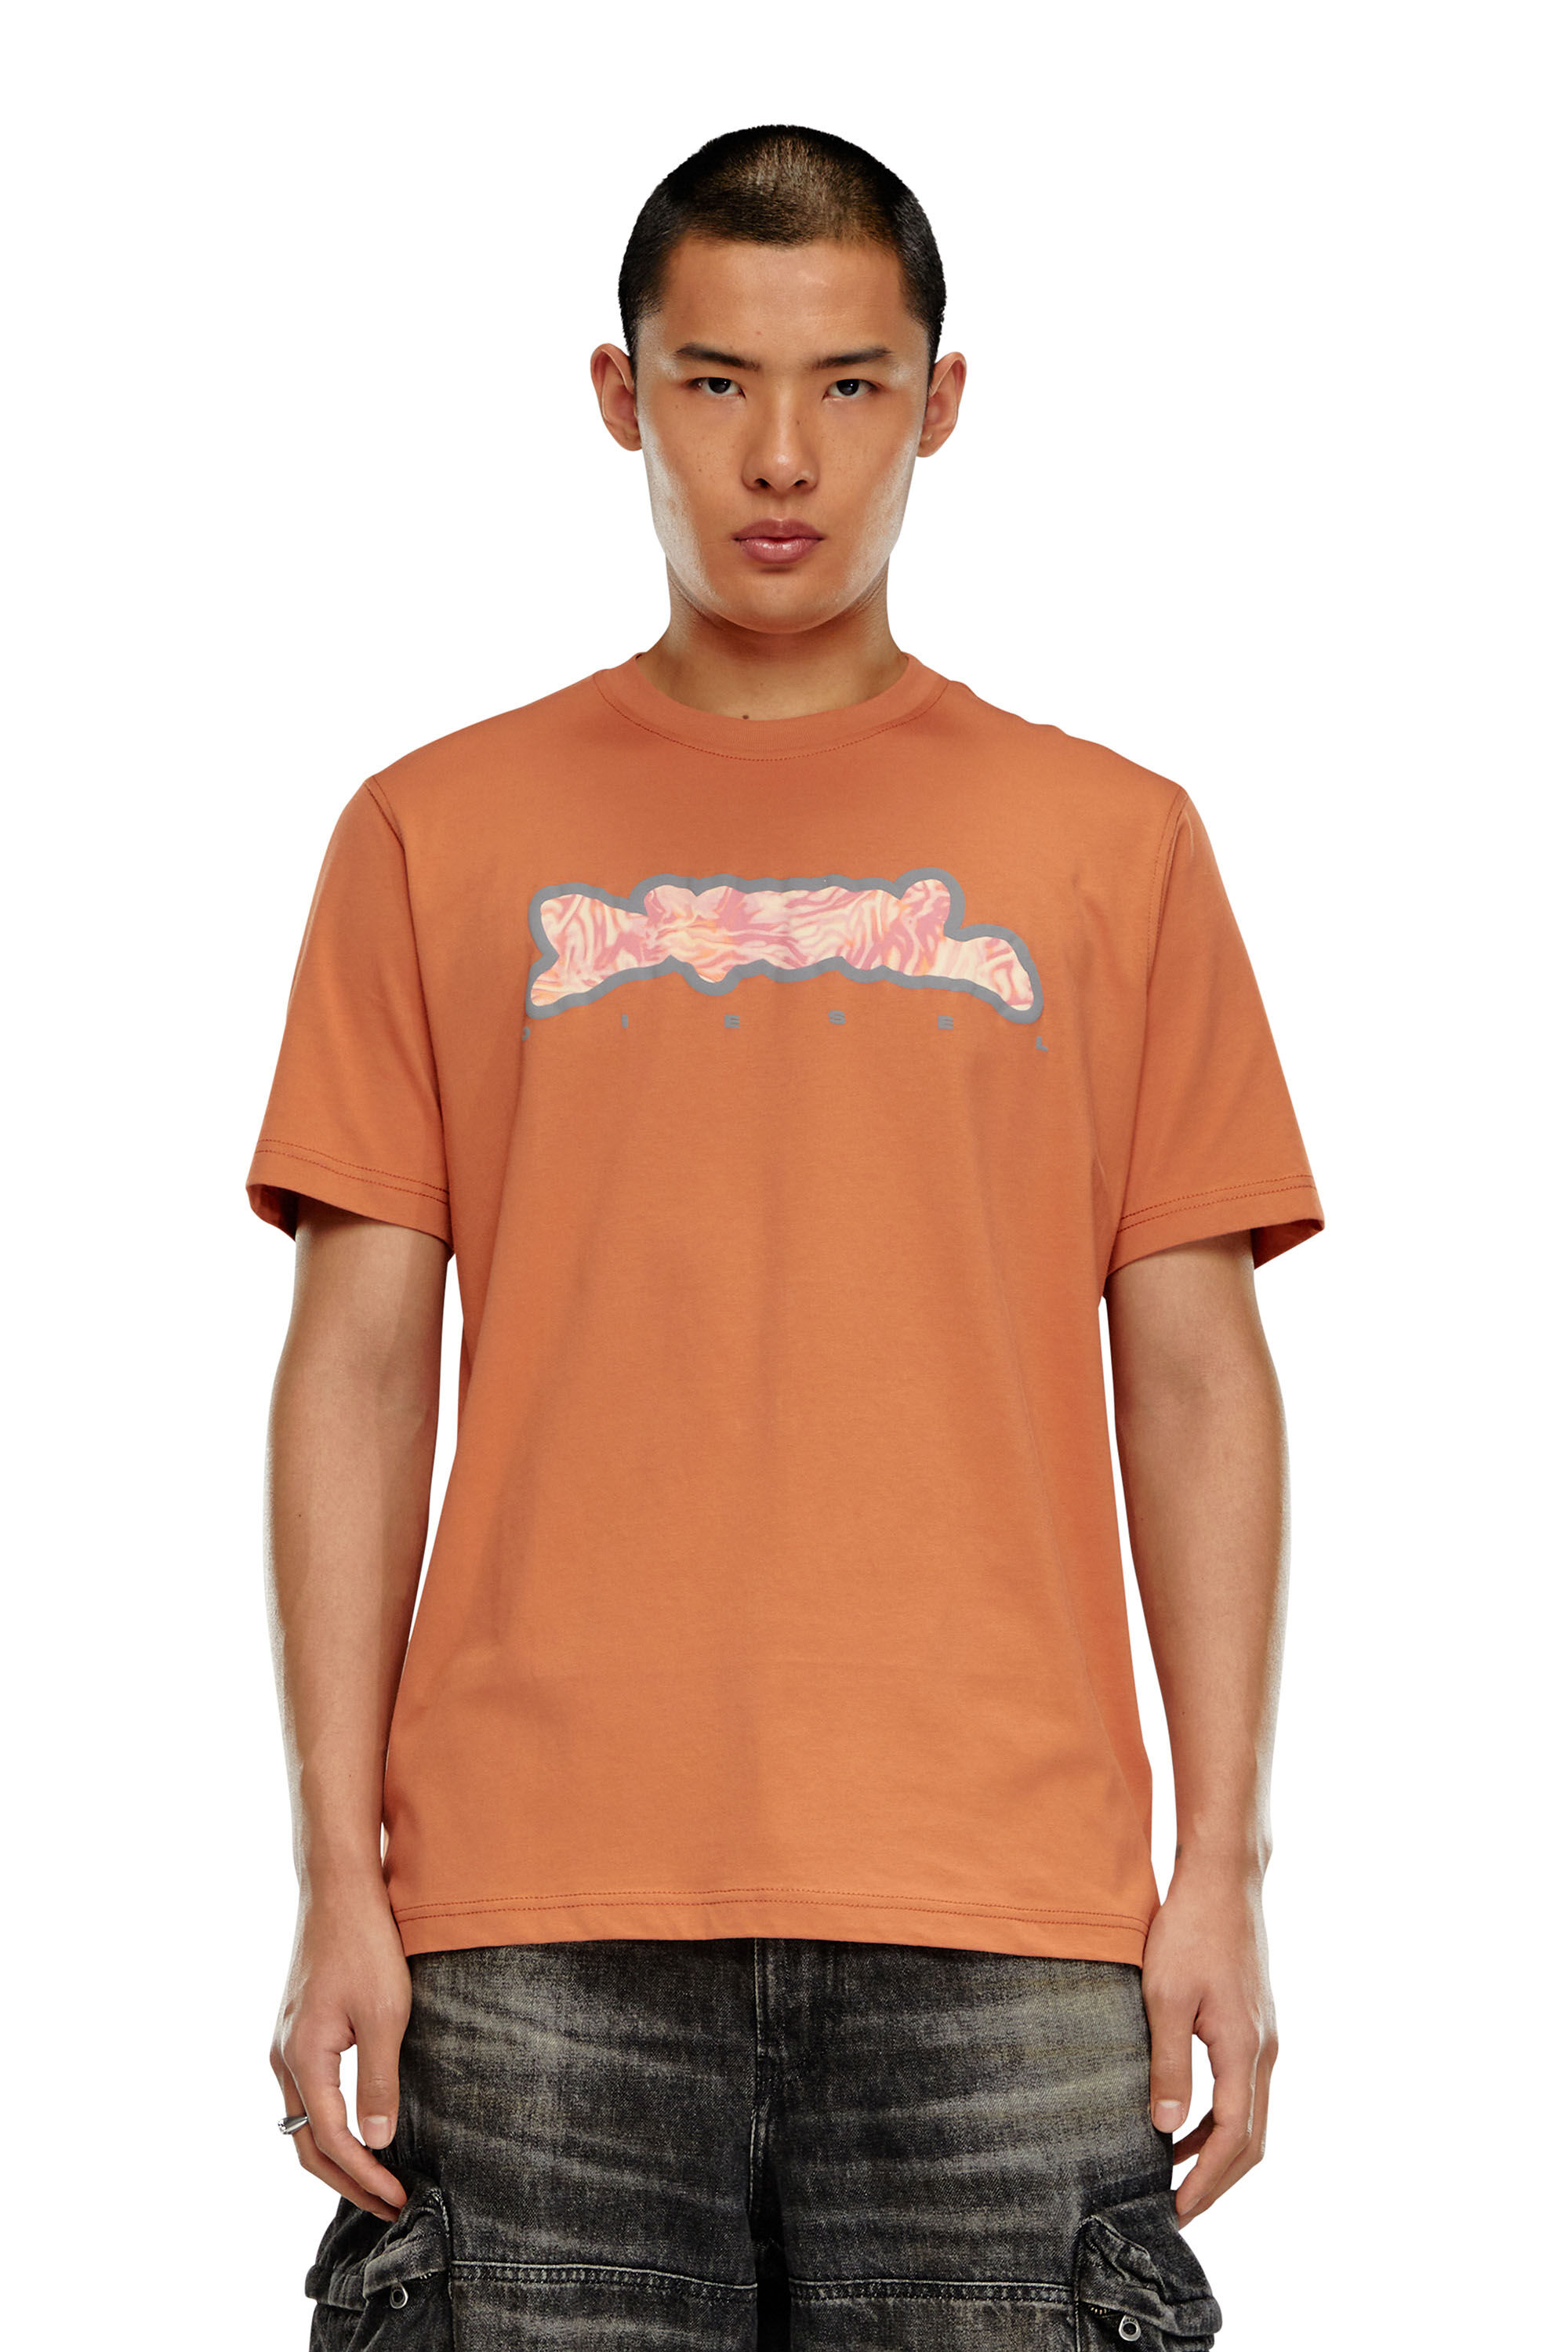 Diesel - T-JUST-N16, Man T-shirt with zebra-camo motif in Orange - Image 2